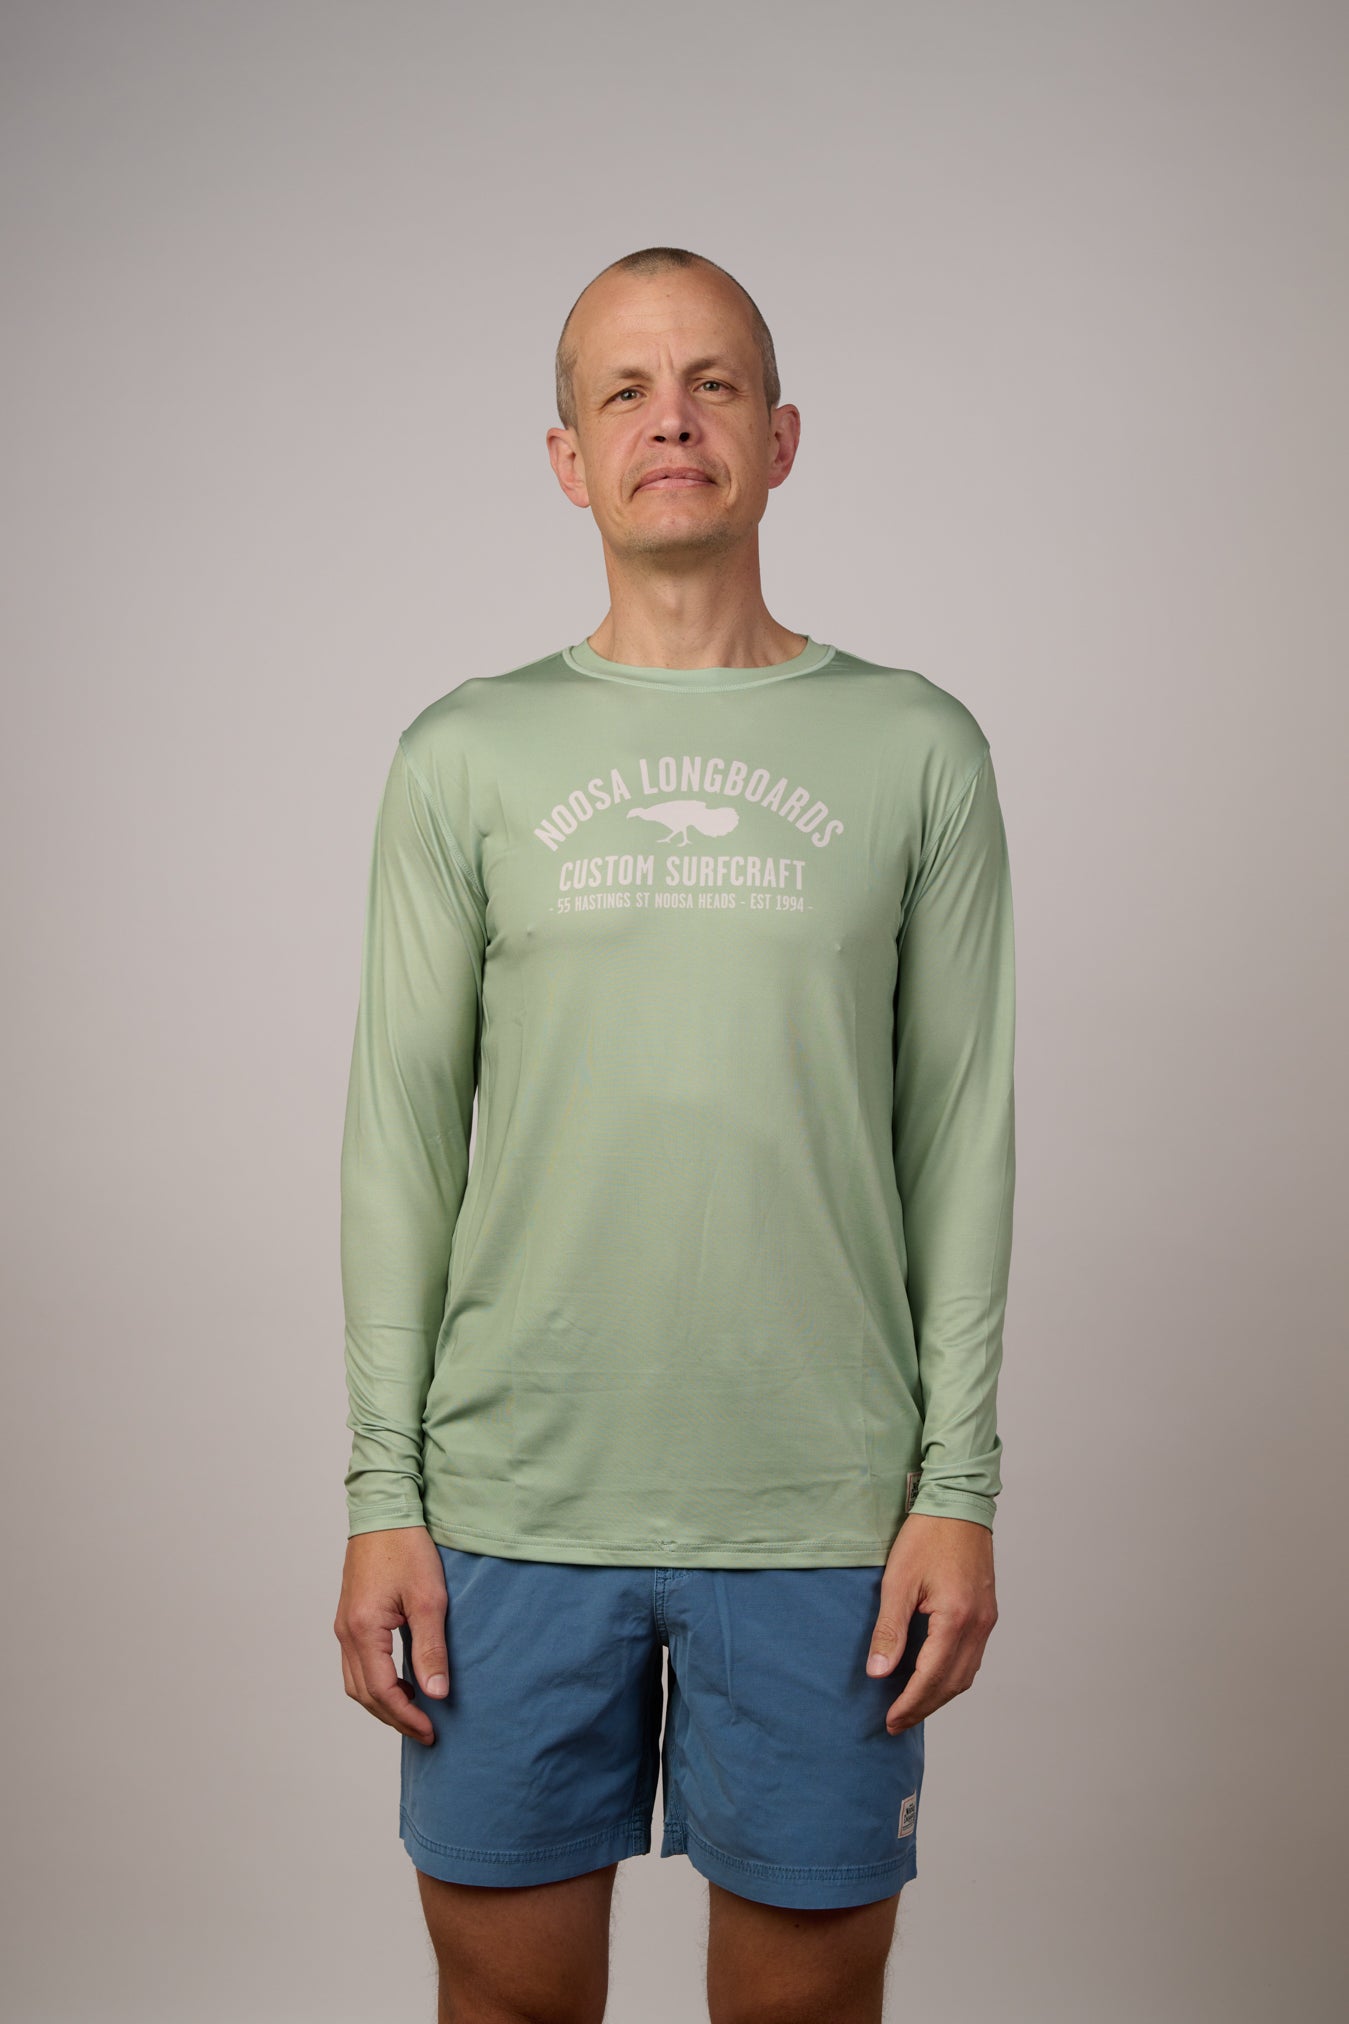 NL Long Sleeve Custom Surfcraft Rash shirt Green